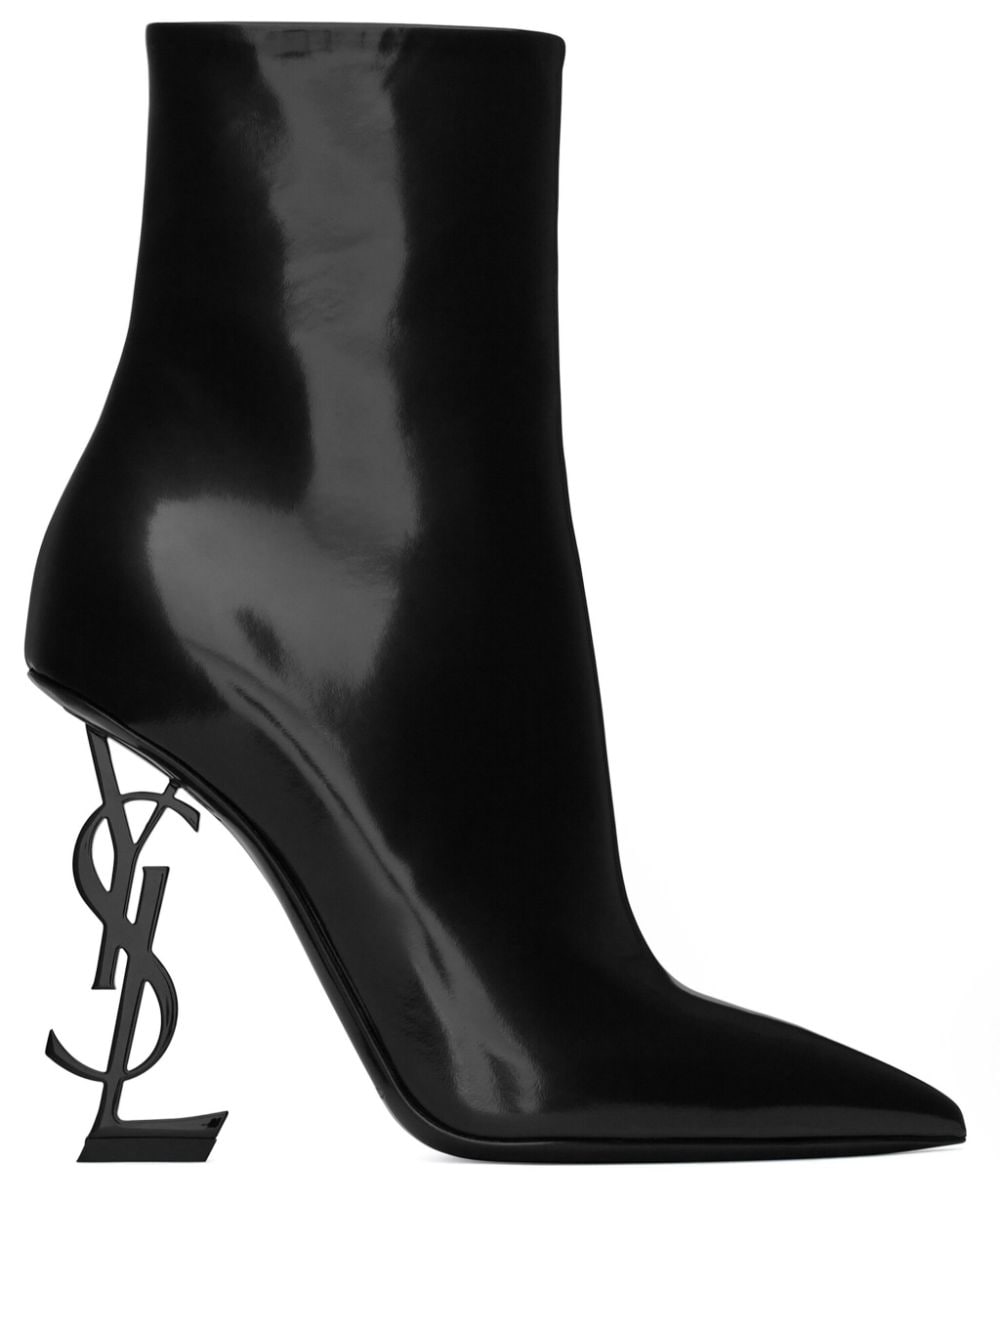 Sophisticated Opyum 110mm Leather Boots cho Phái nữ - Màu Đen